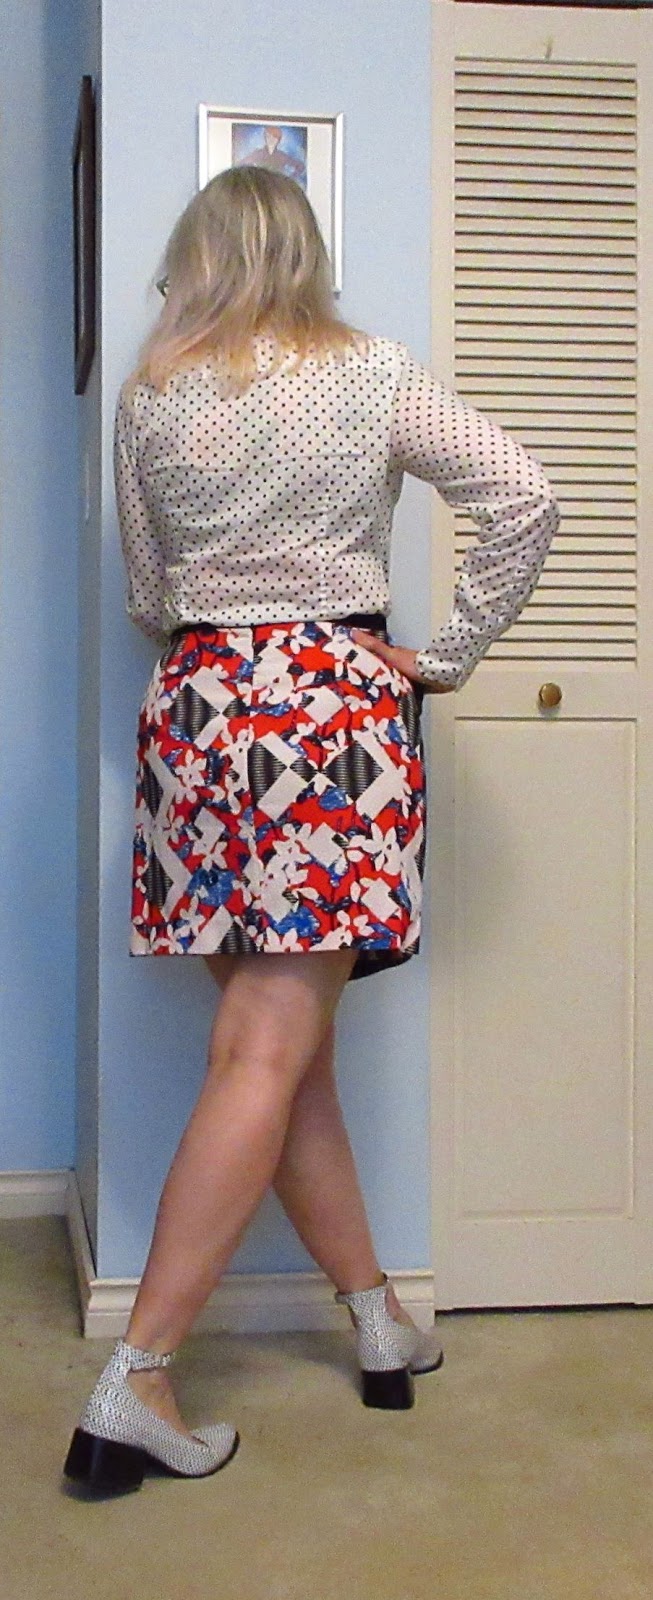 Ephemera: A Very Short Skirt